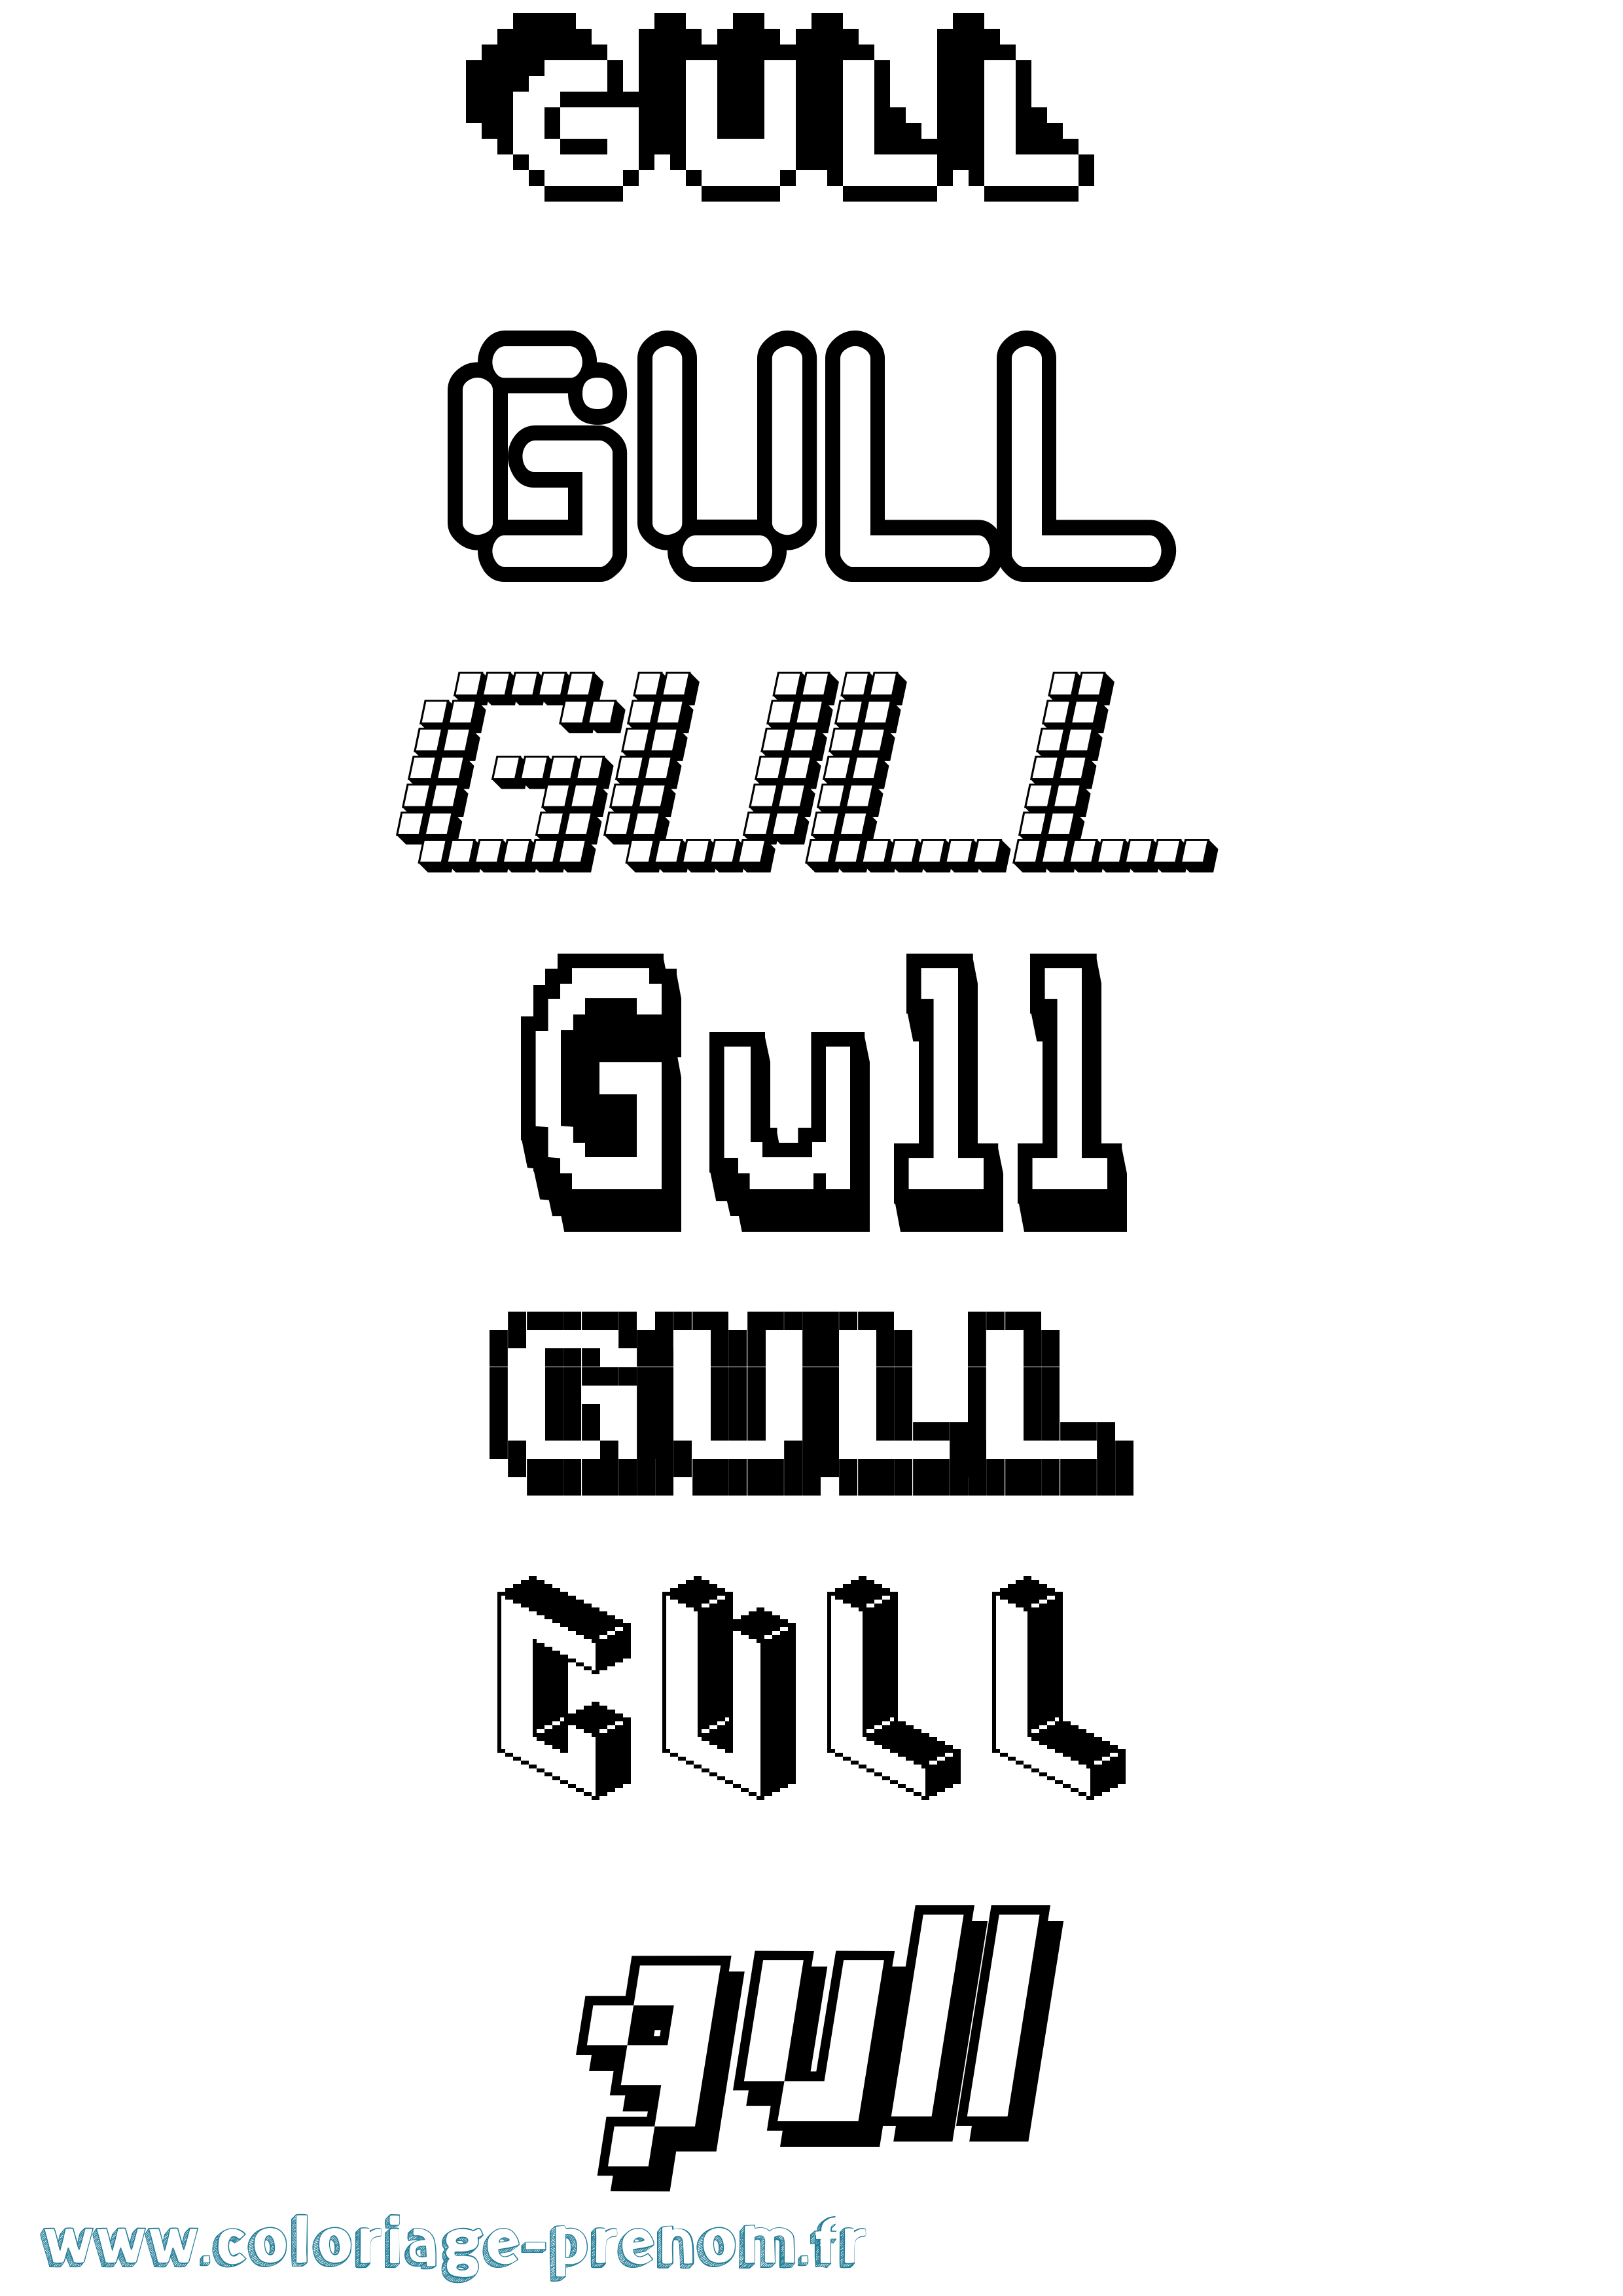 Coloriage prénom Gull Pixel